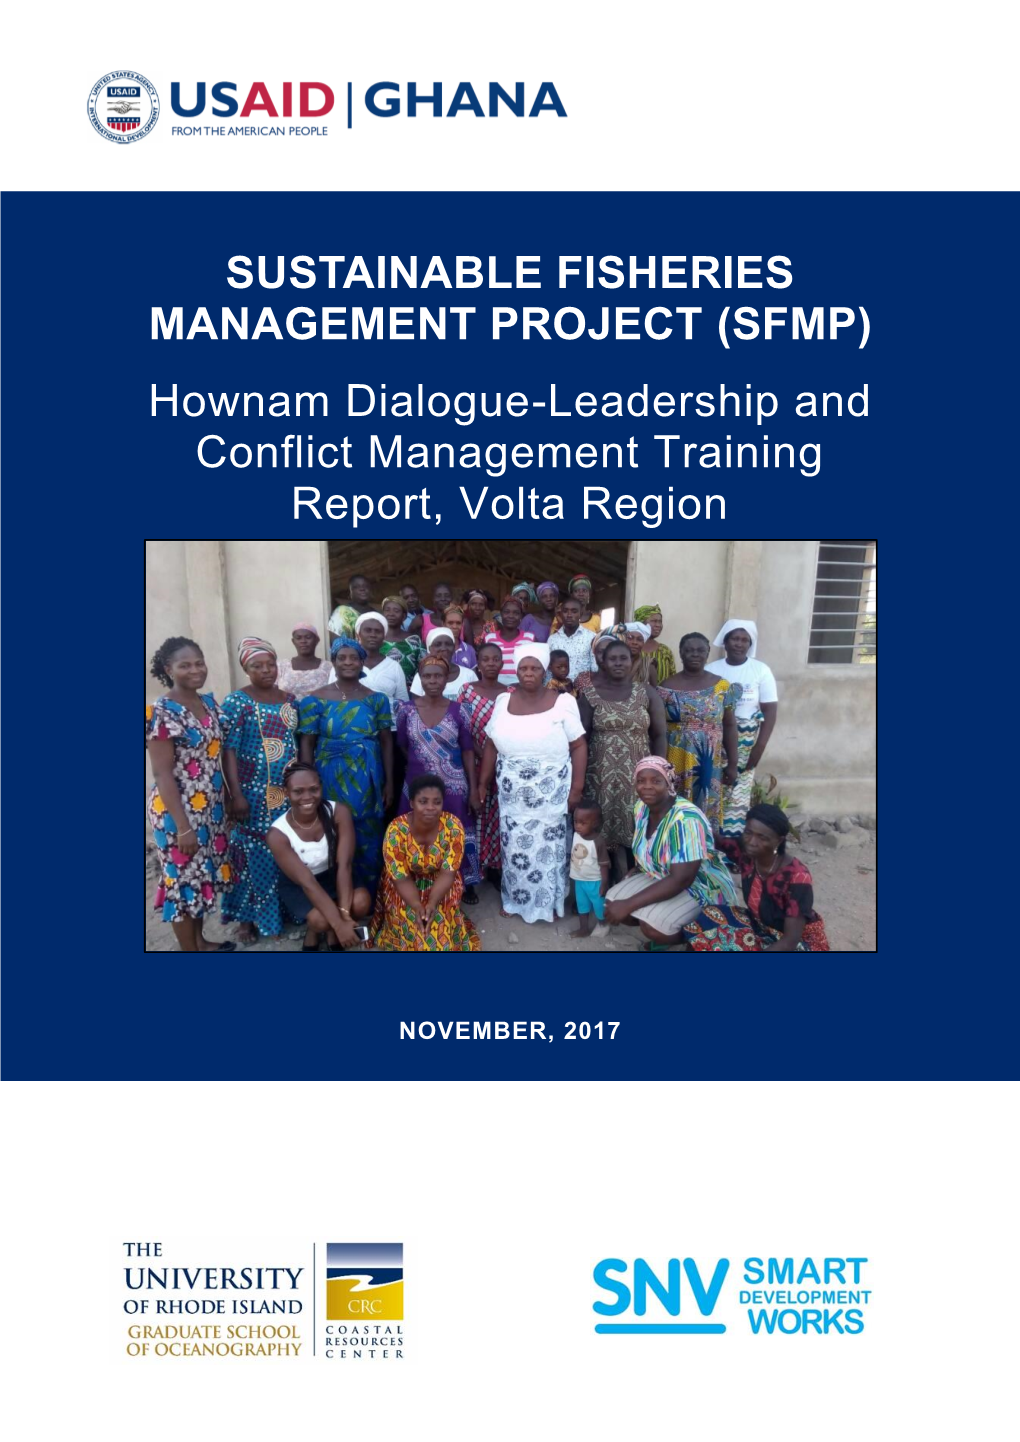 Leadership and Conflict Management Training Report, Volta Region